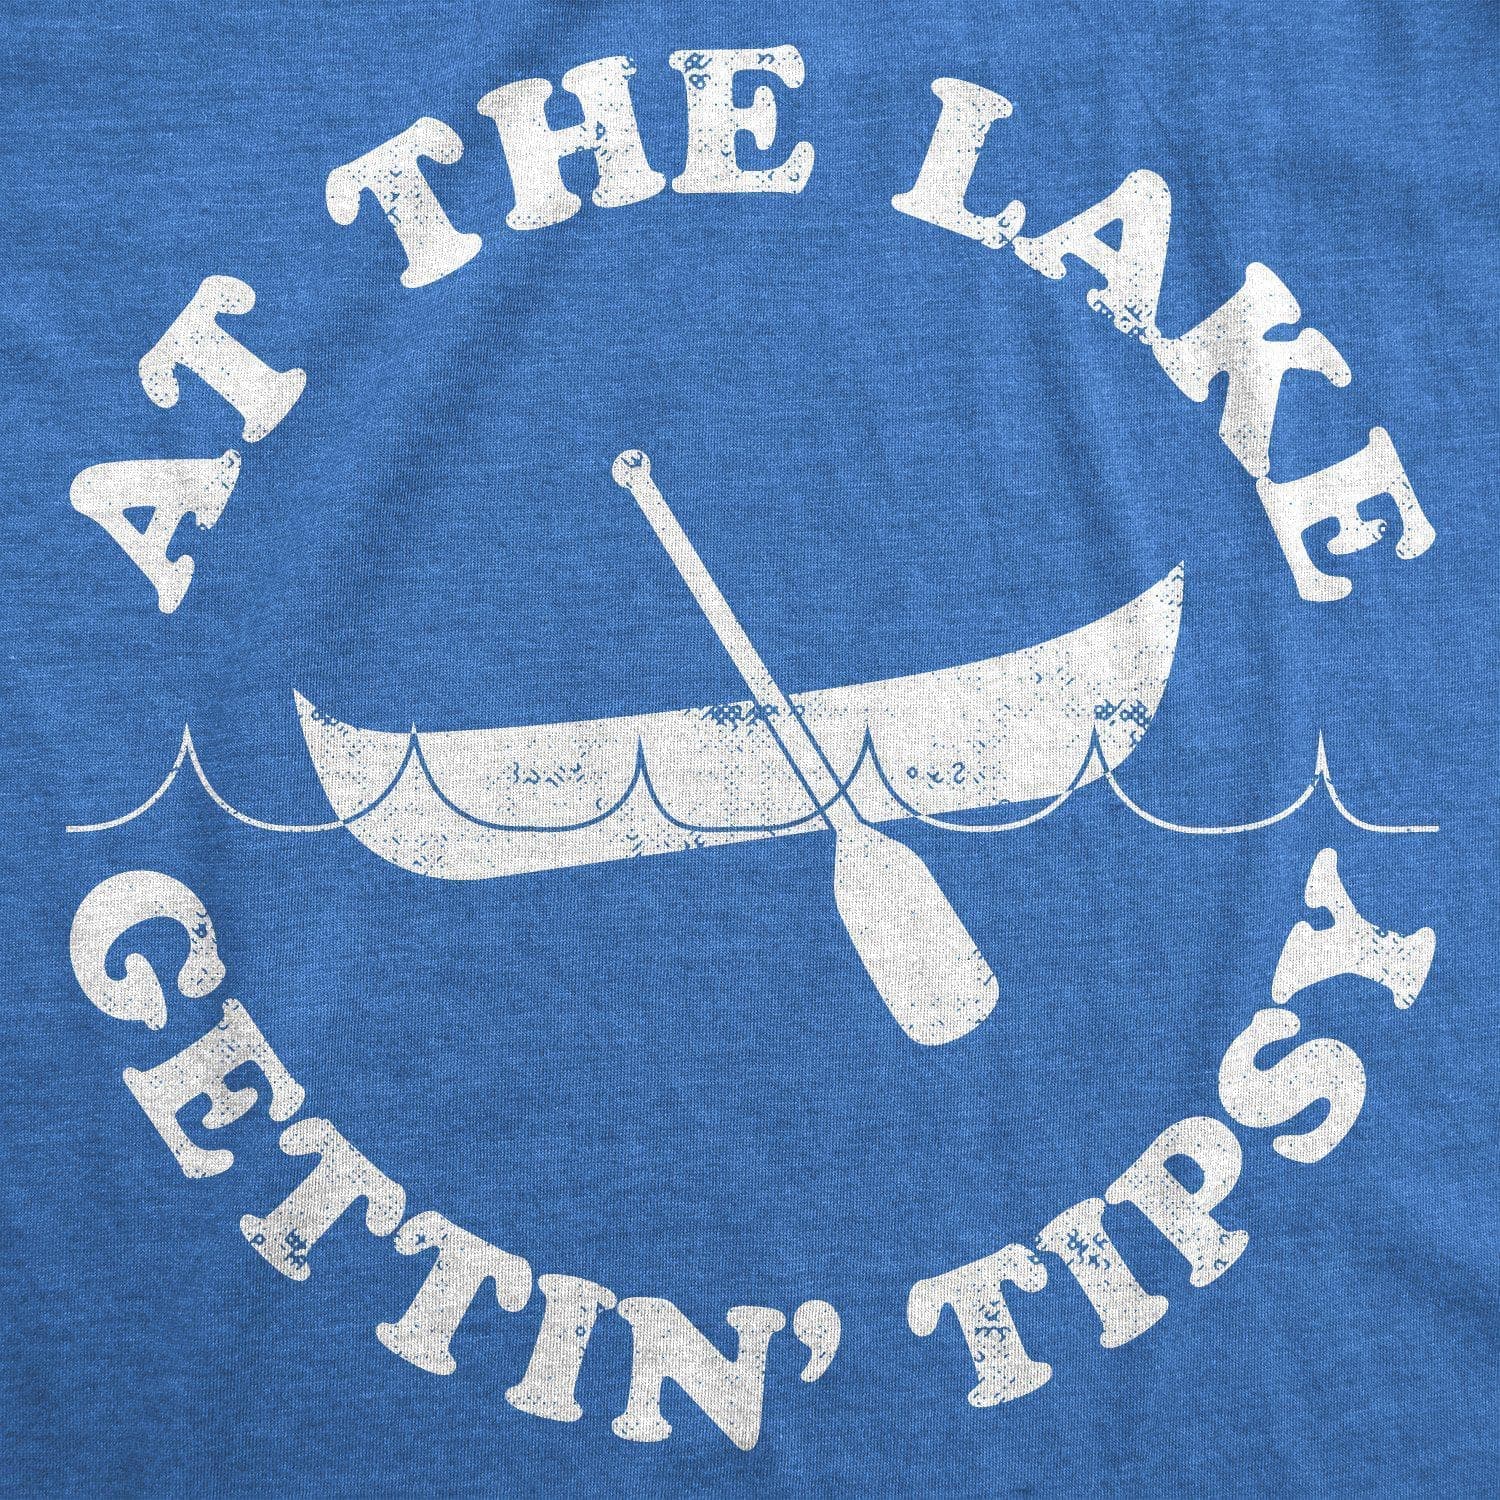 At The Lake Gettin' Tipsy Women's Tshirt - Crazy Dog T-Shirts